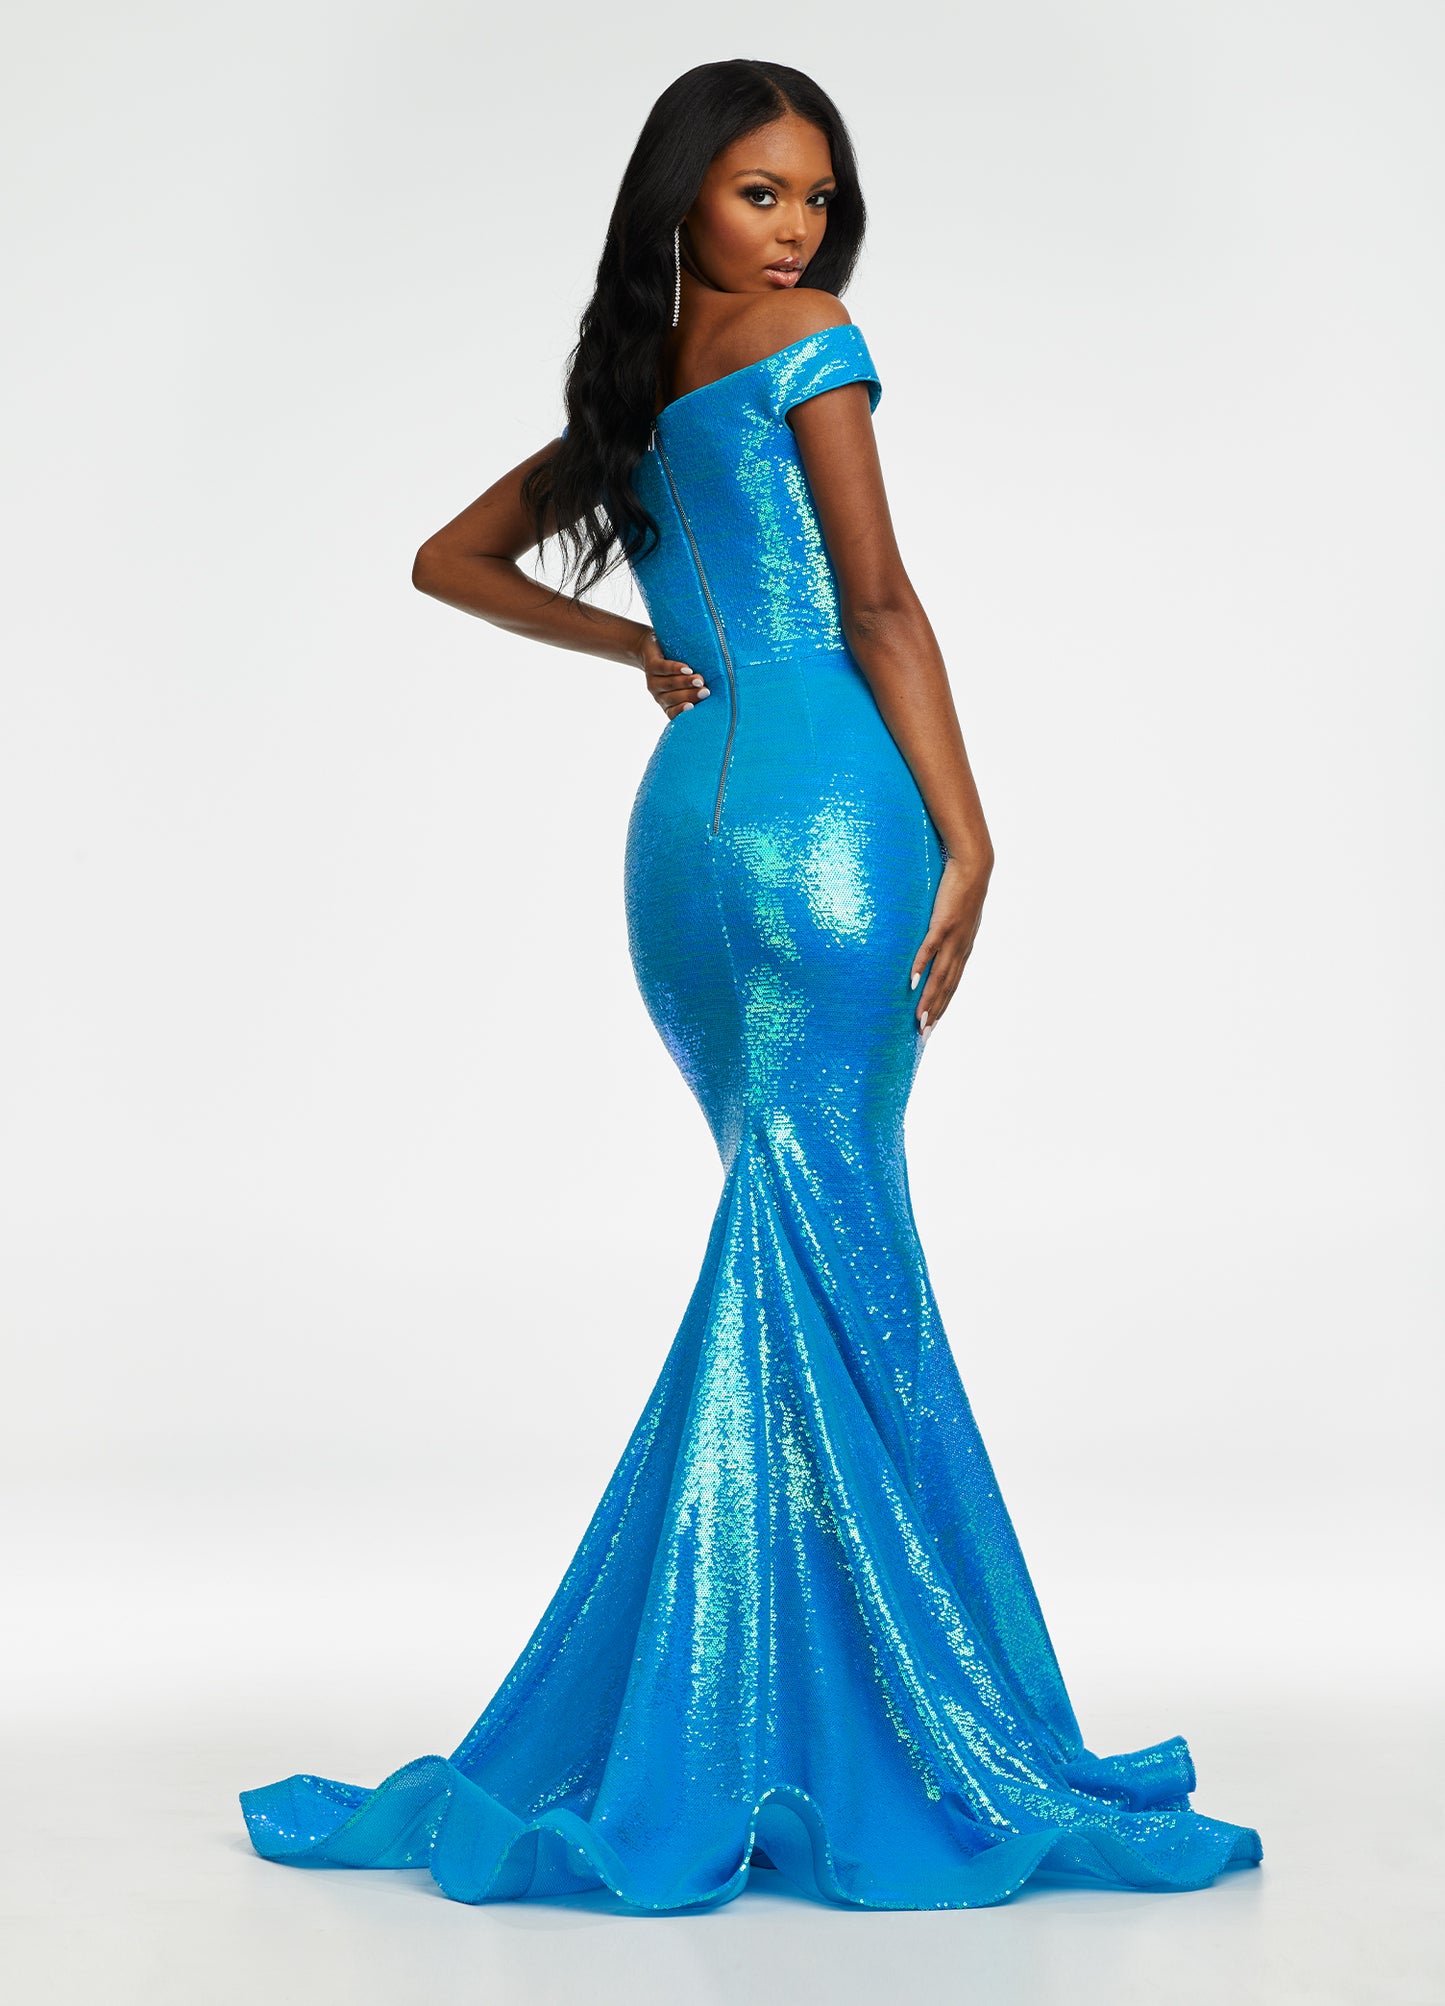 Ashley Lauren 11109 Size 16 Neon Off the shoulder sequin prom dress pageant gown